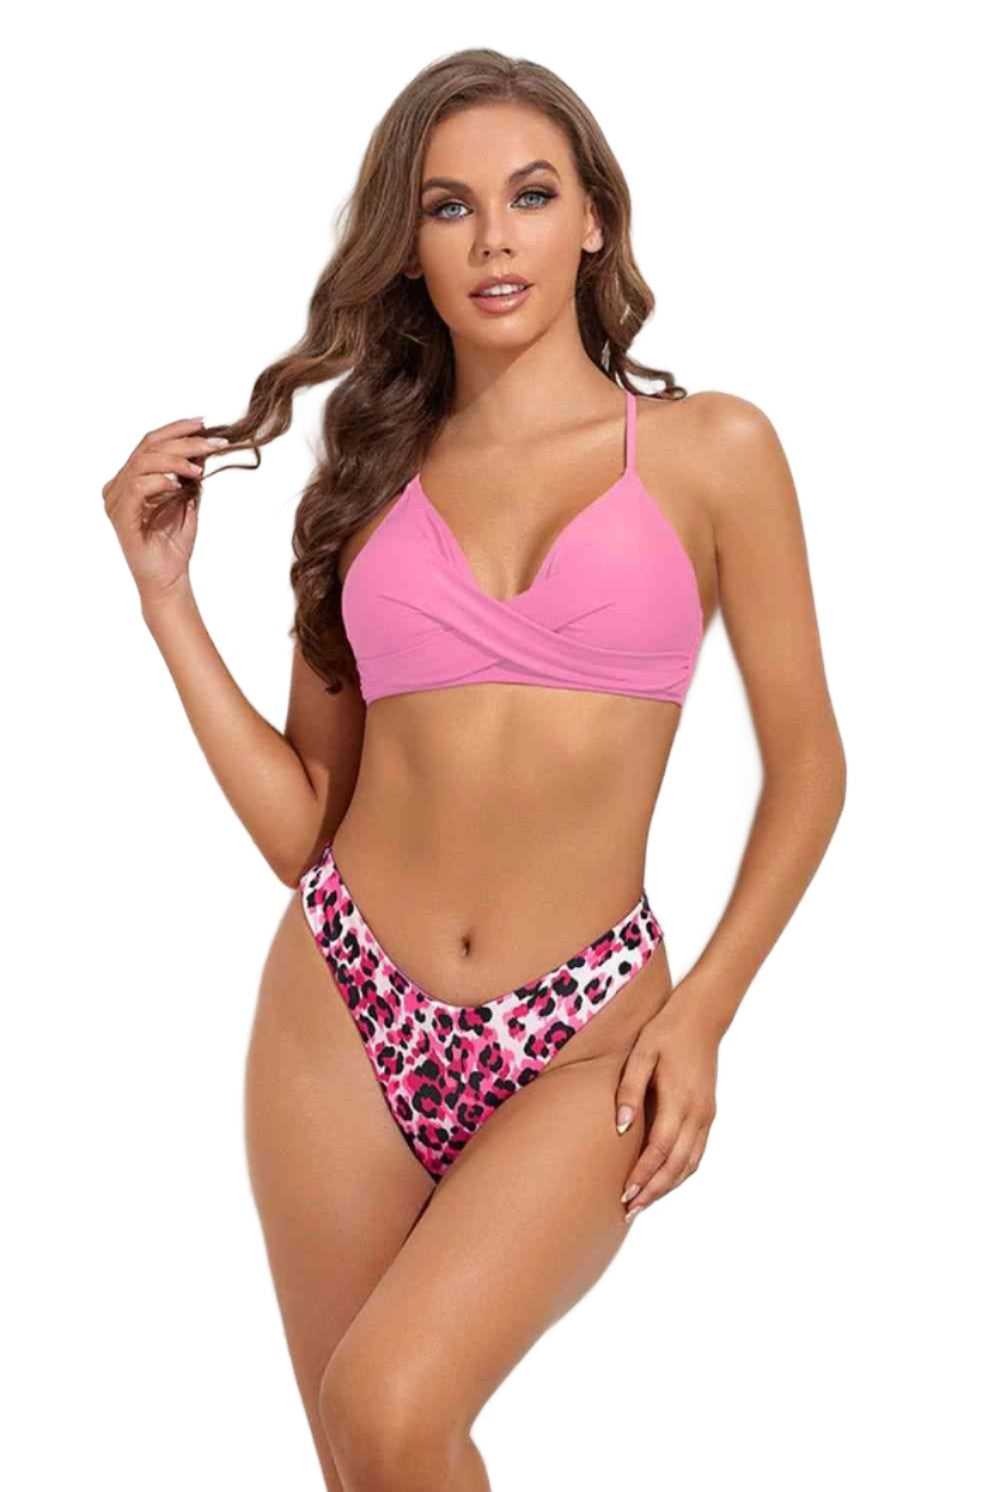 Women's Swimwear - 2PC Leopard Print Crisscross Bikini Set